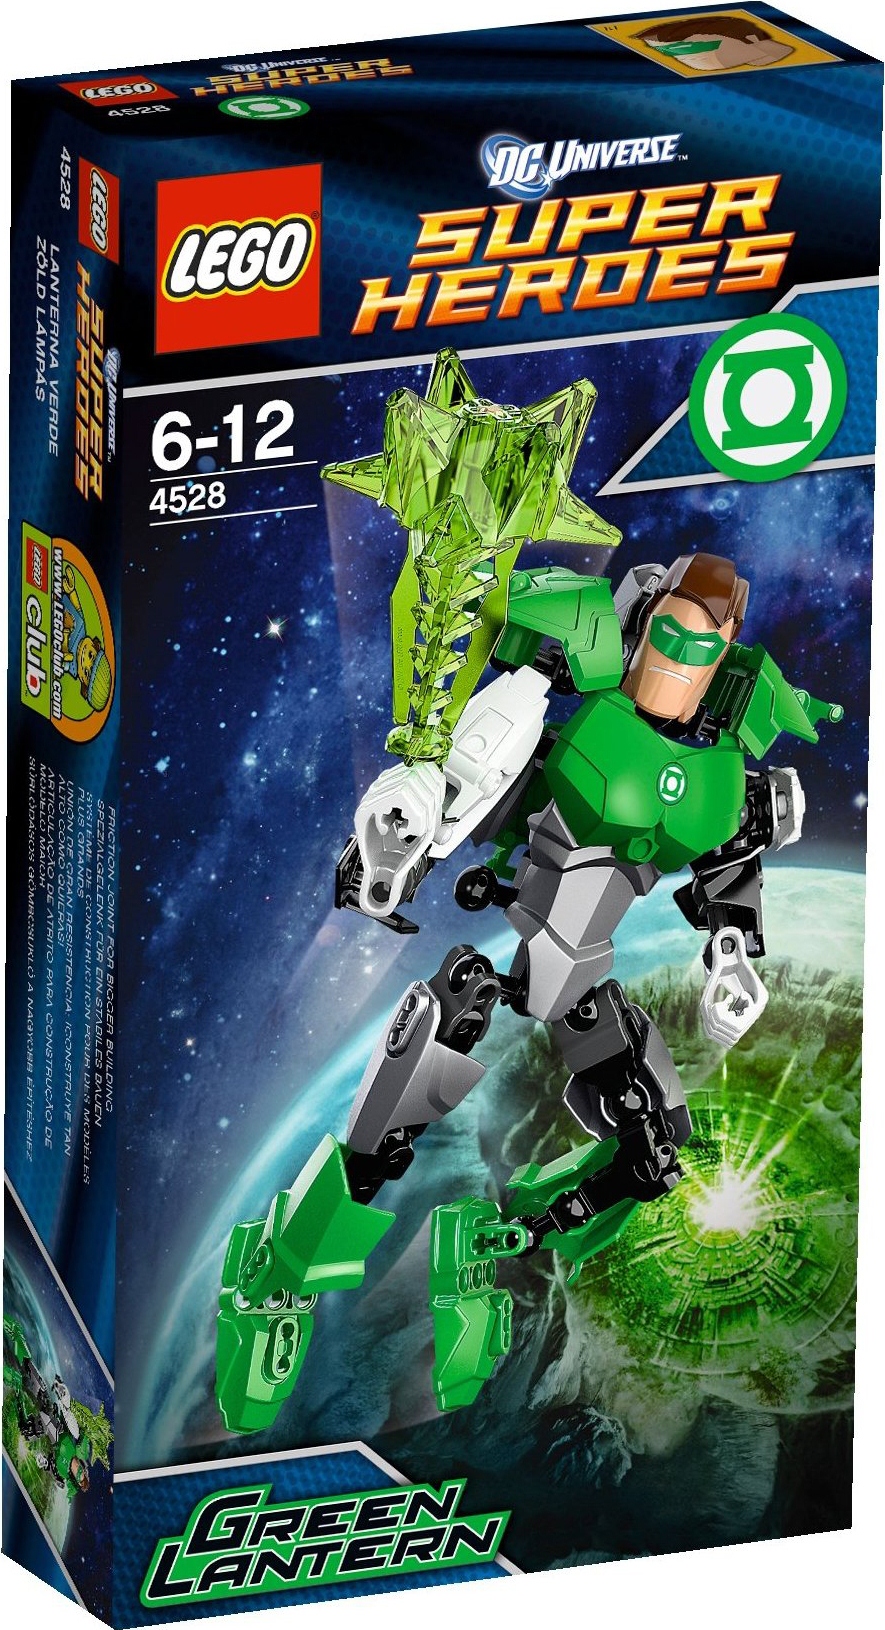 Green Lantern™ 4528